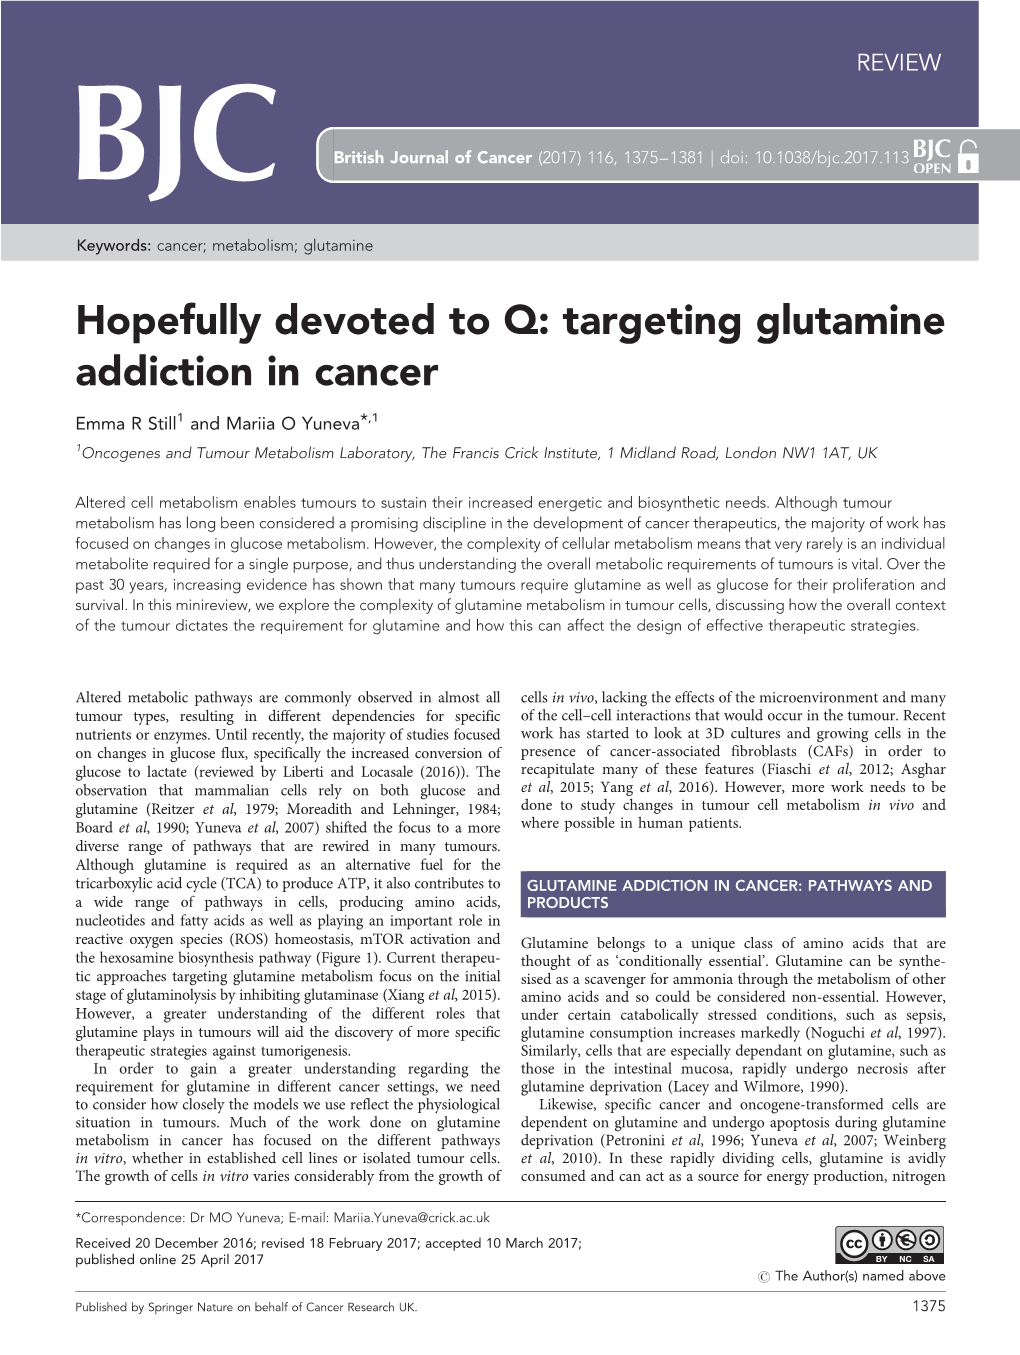 Targeting Glutamine Addiction in Cancer